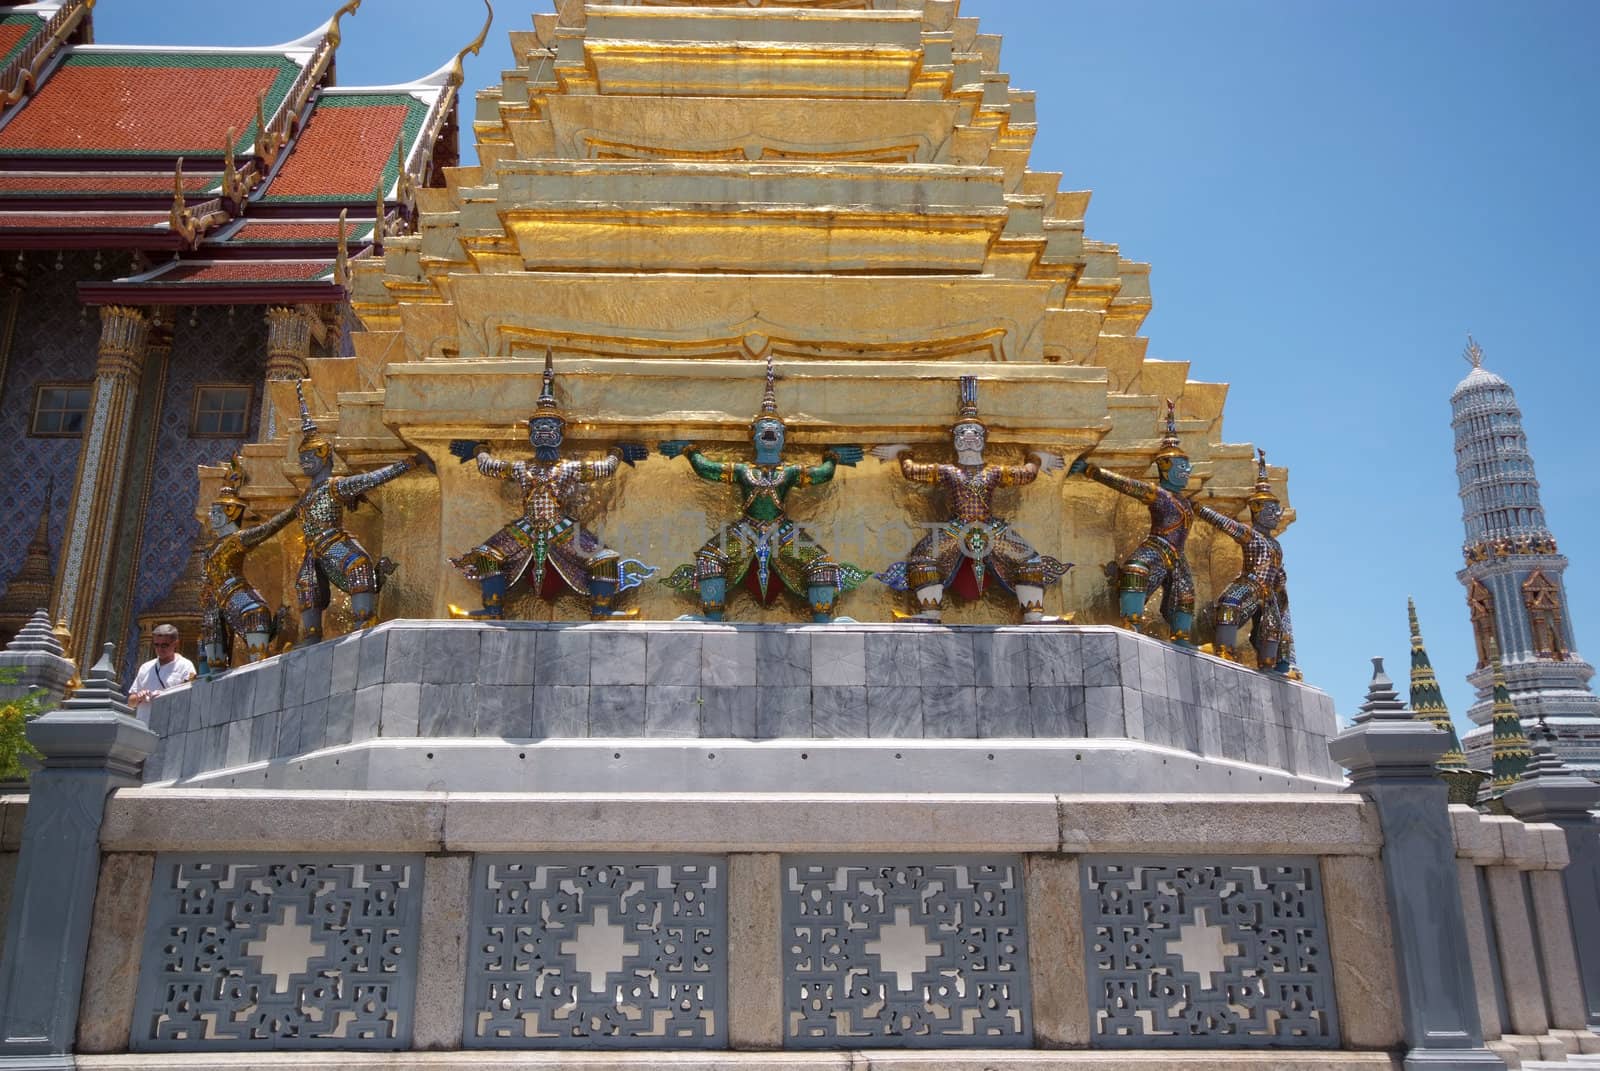 The Golden pagoda of Wat Phra Kaew temple, Bangkok, Thailand 